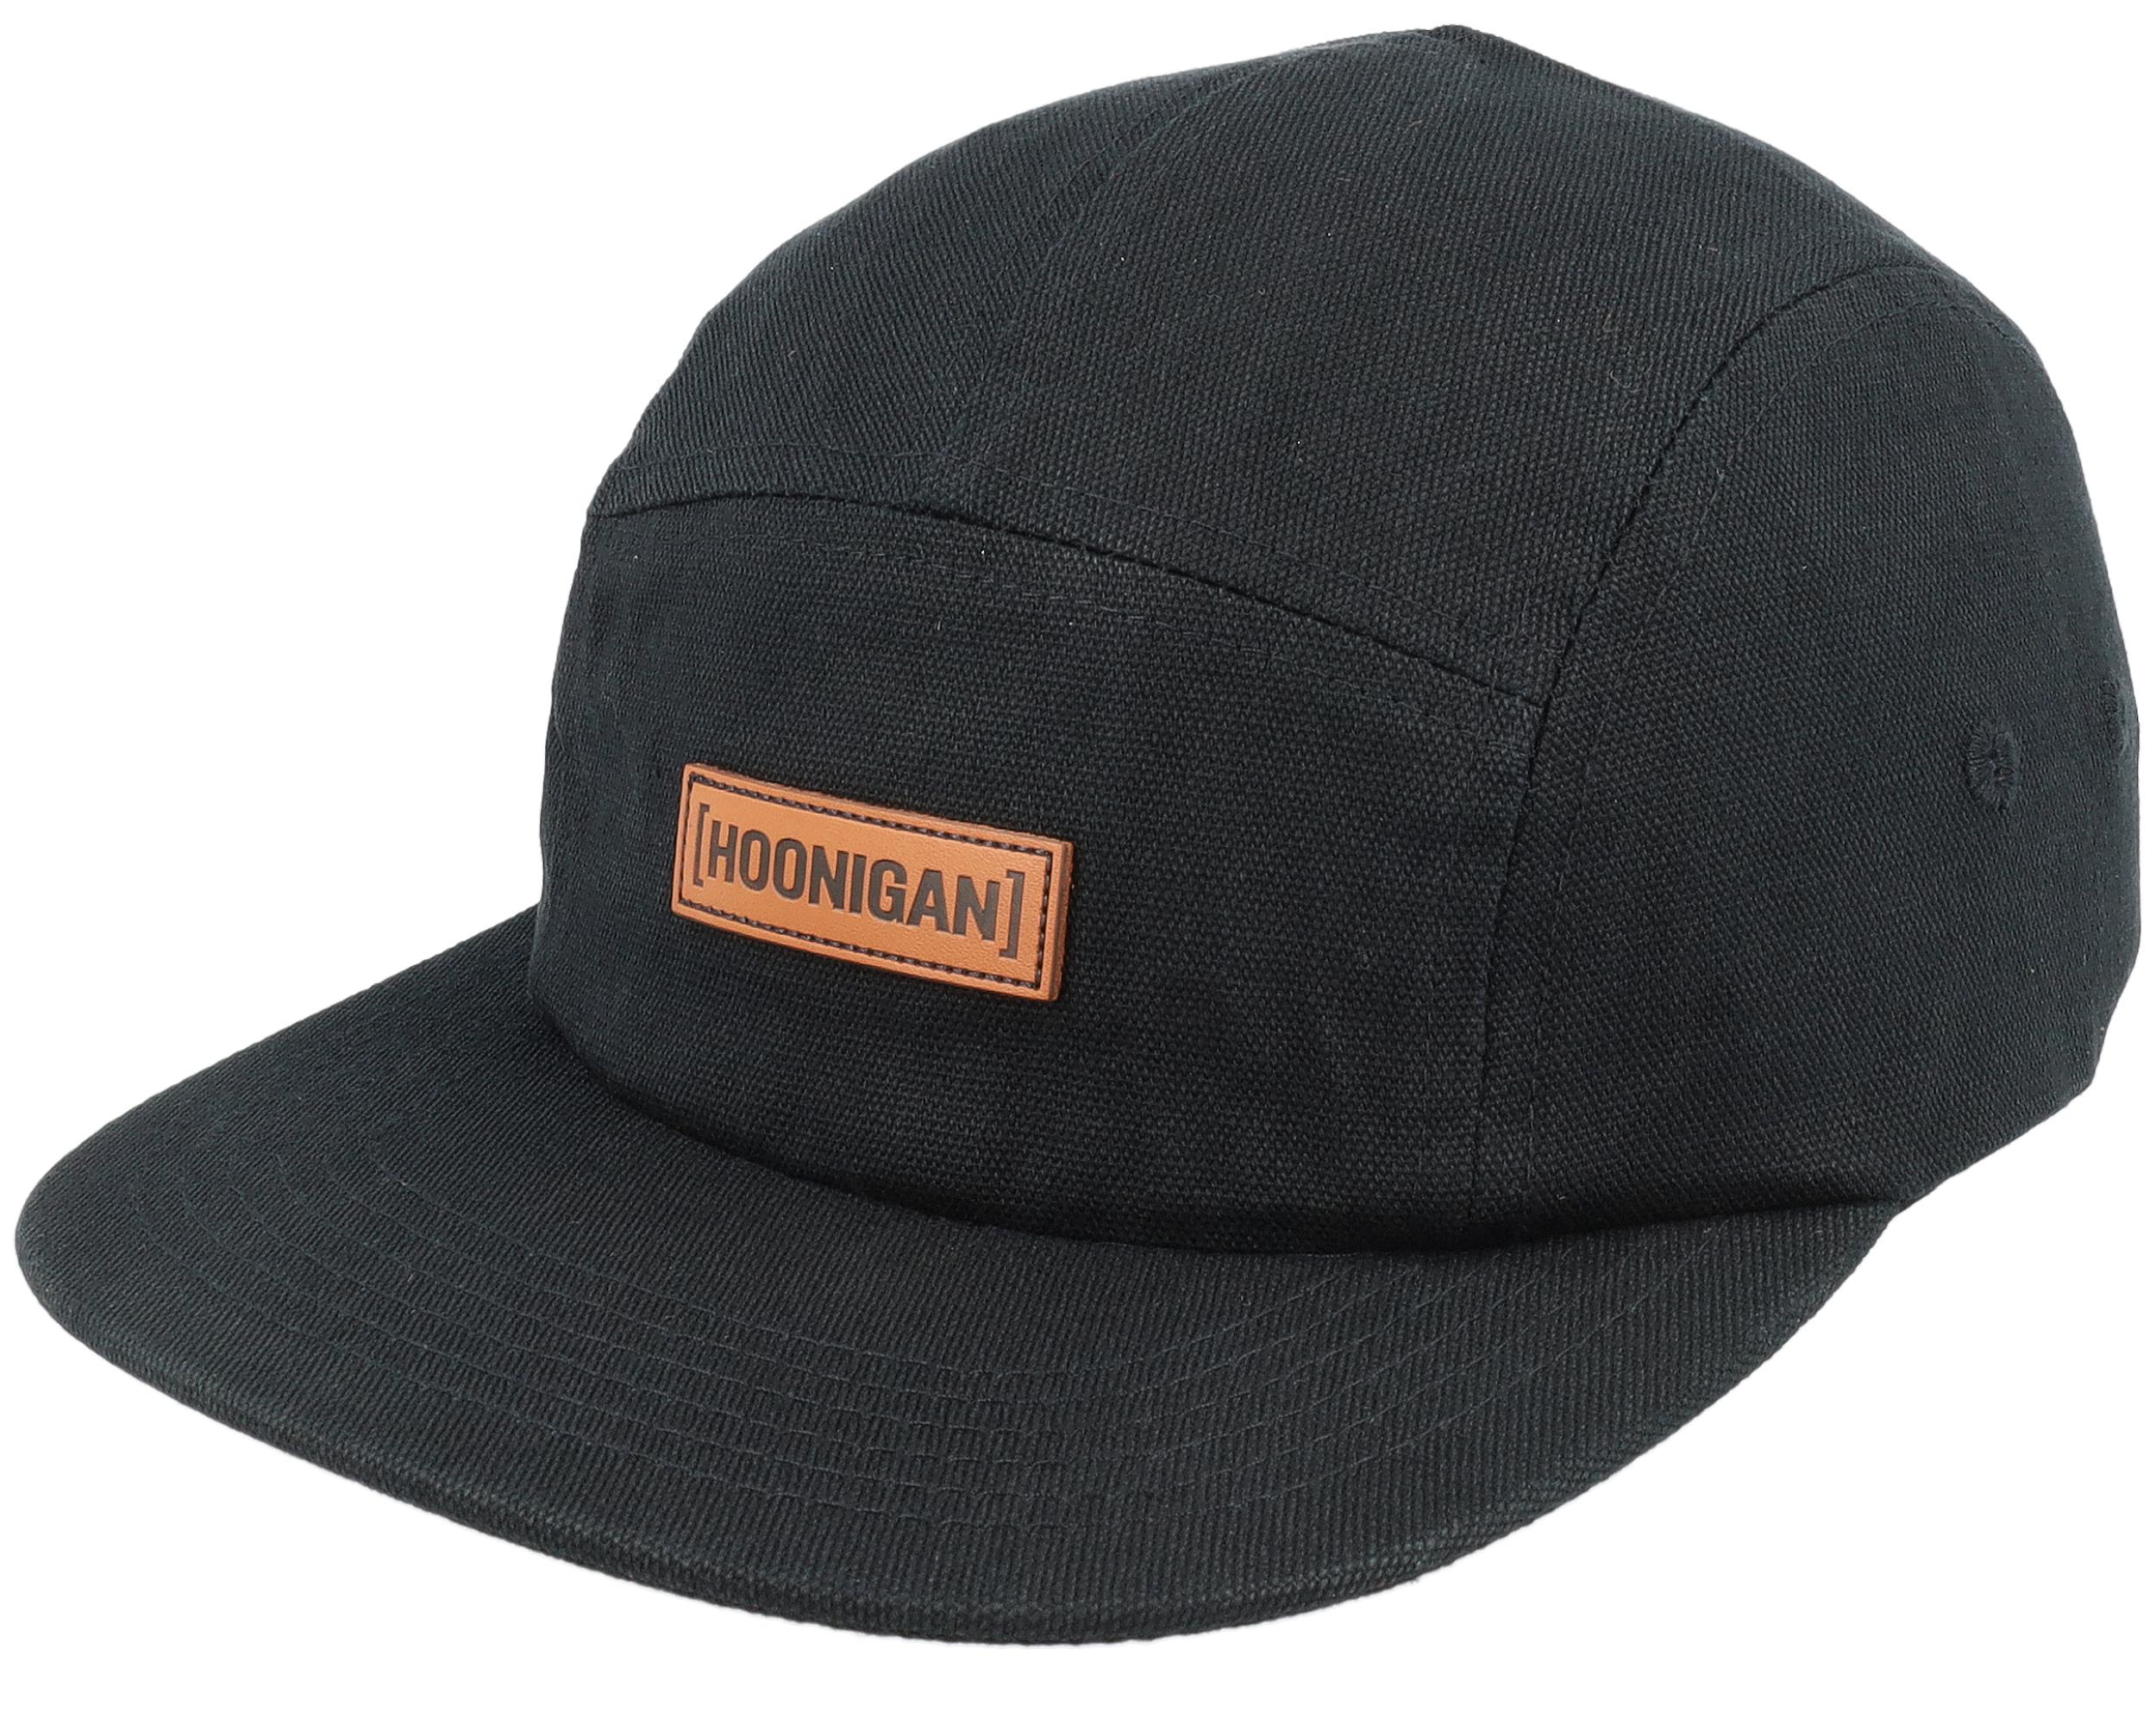 Lodge Camper Hat Black 5-Panel - Hoonigan 棒球帽 | Hatstore.com